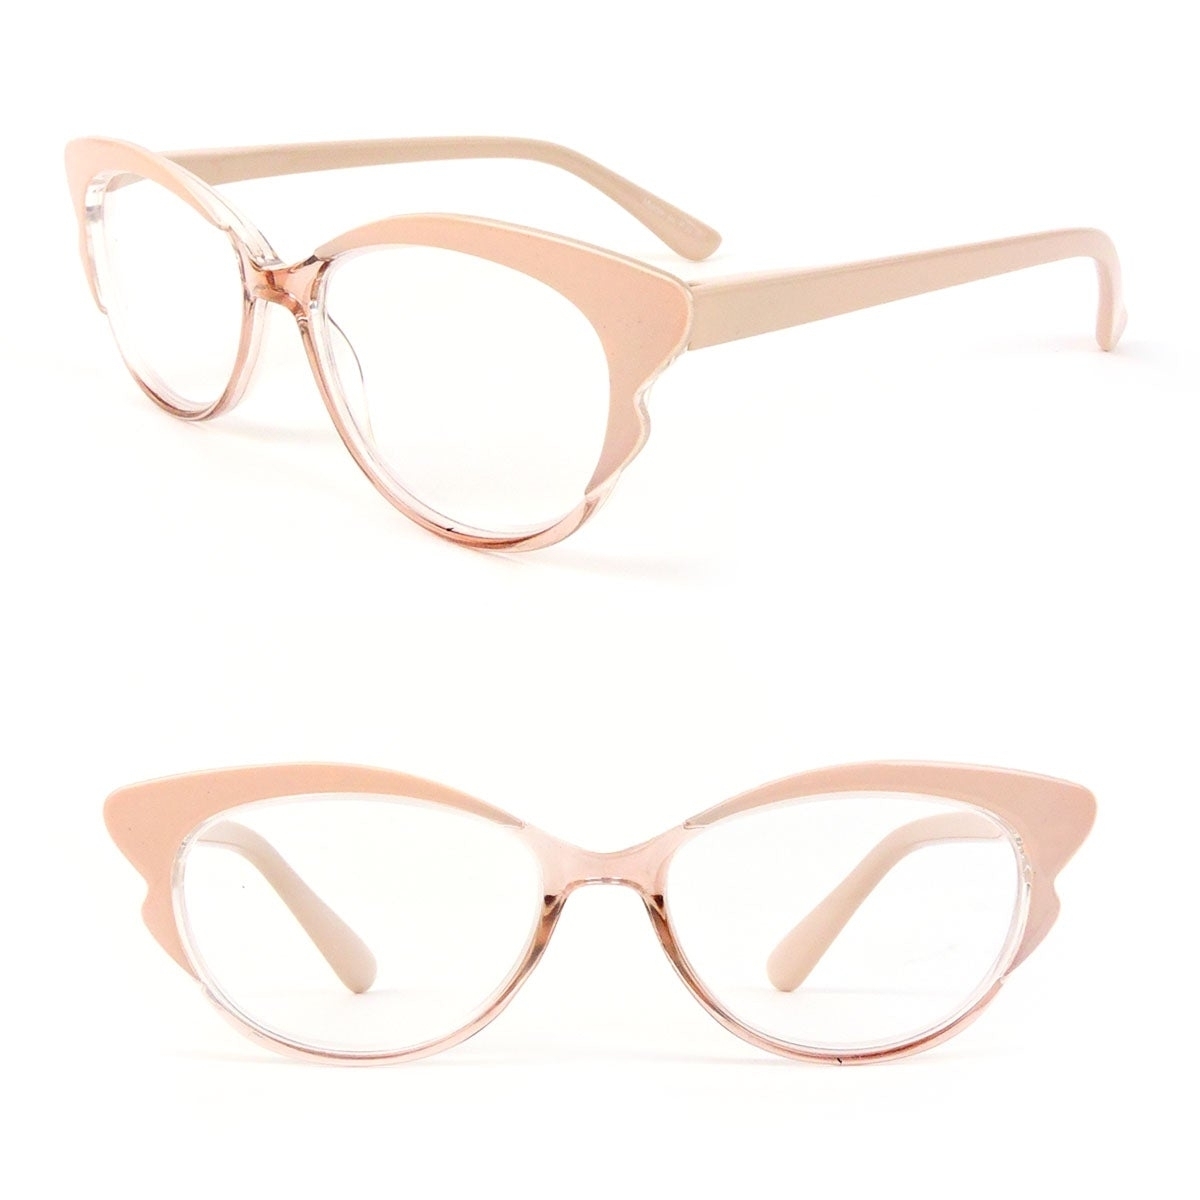 Cat Eye Frame Spring Hinges Fashion Women's Reading Glasses - Beige, +2.75